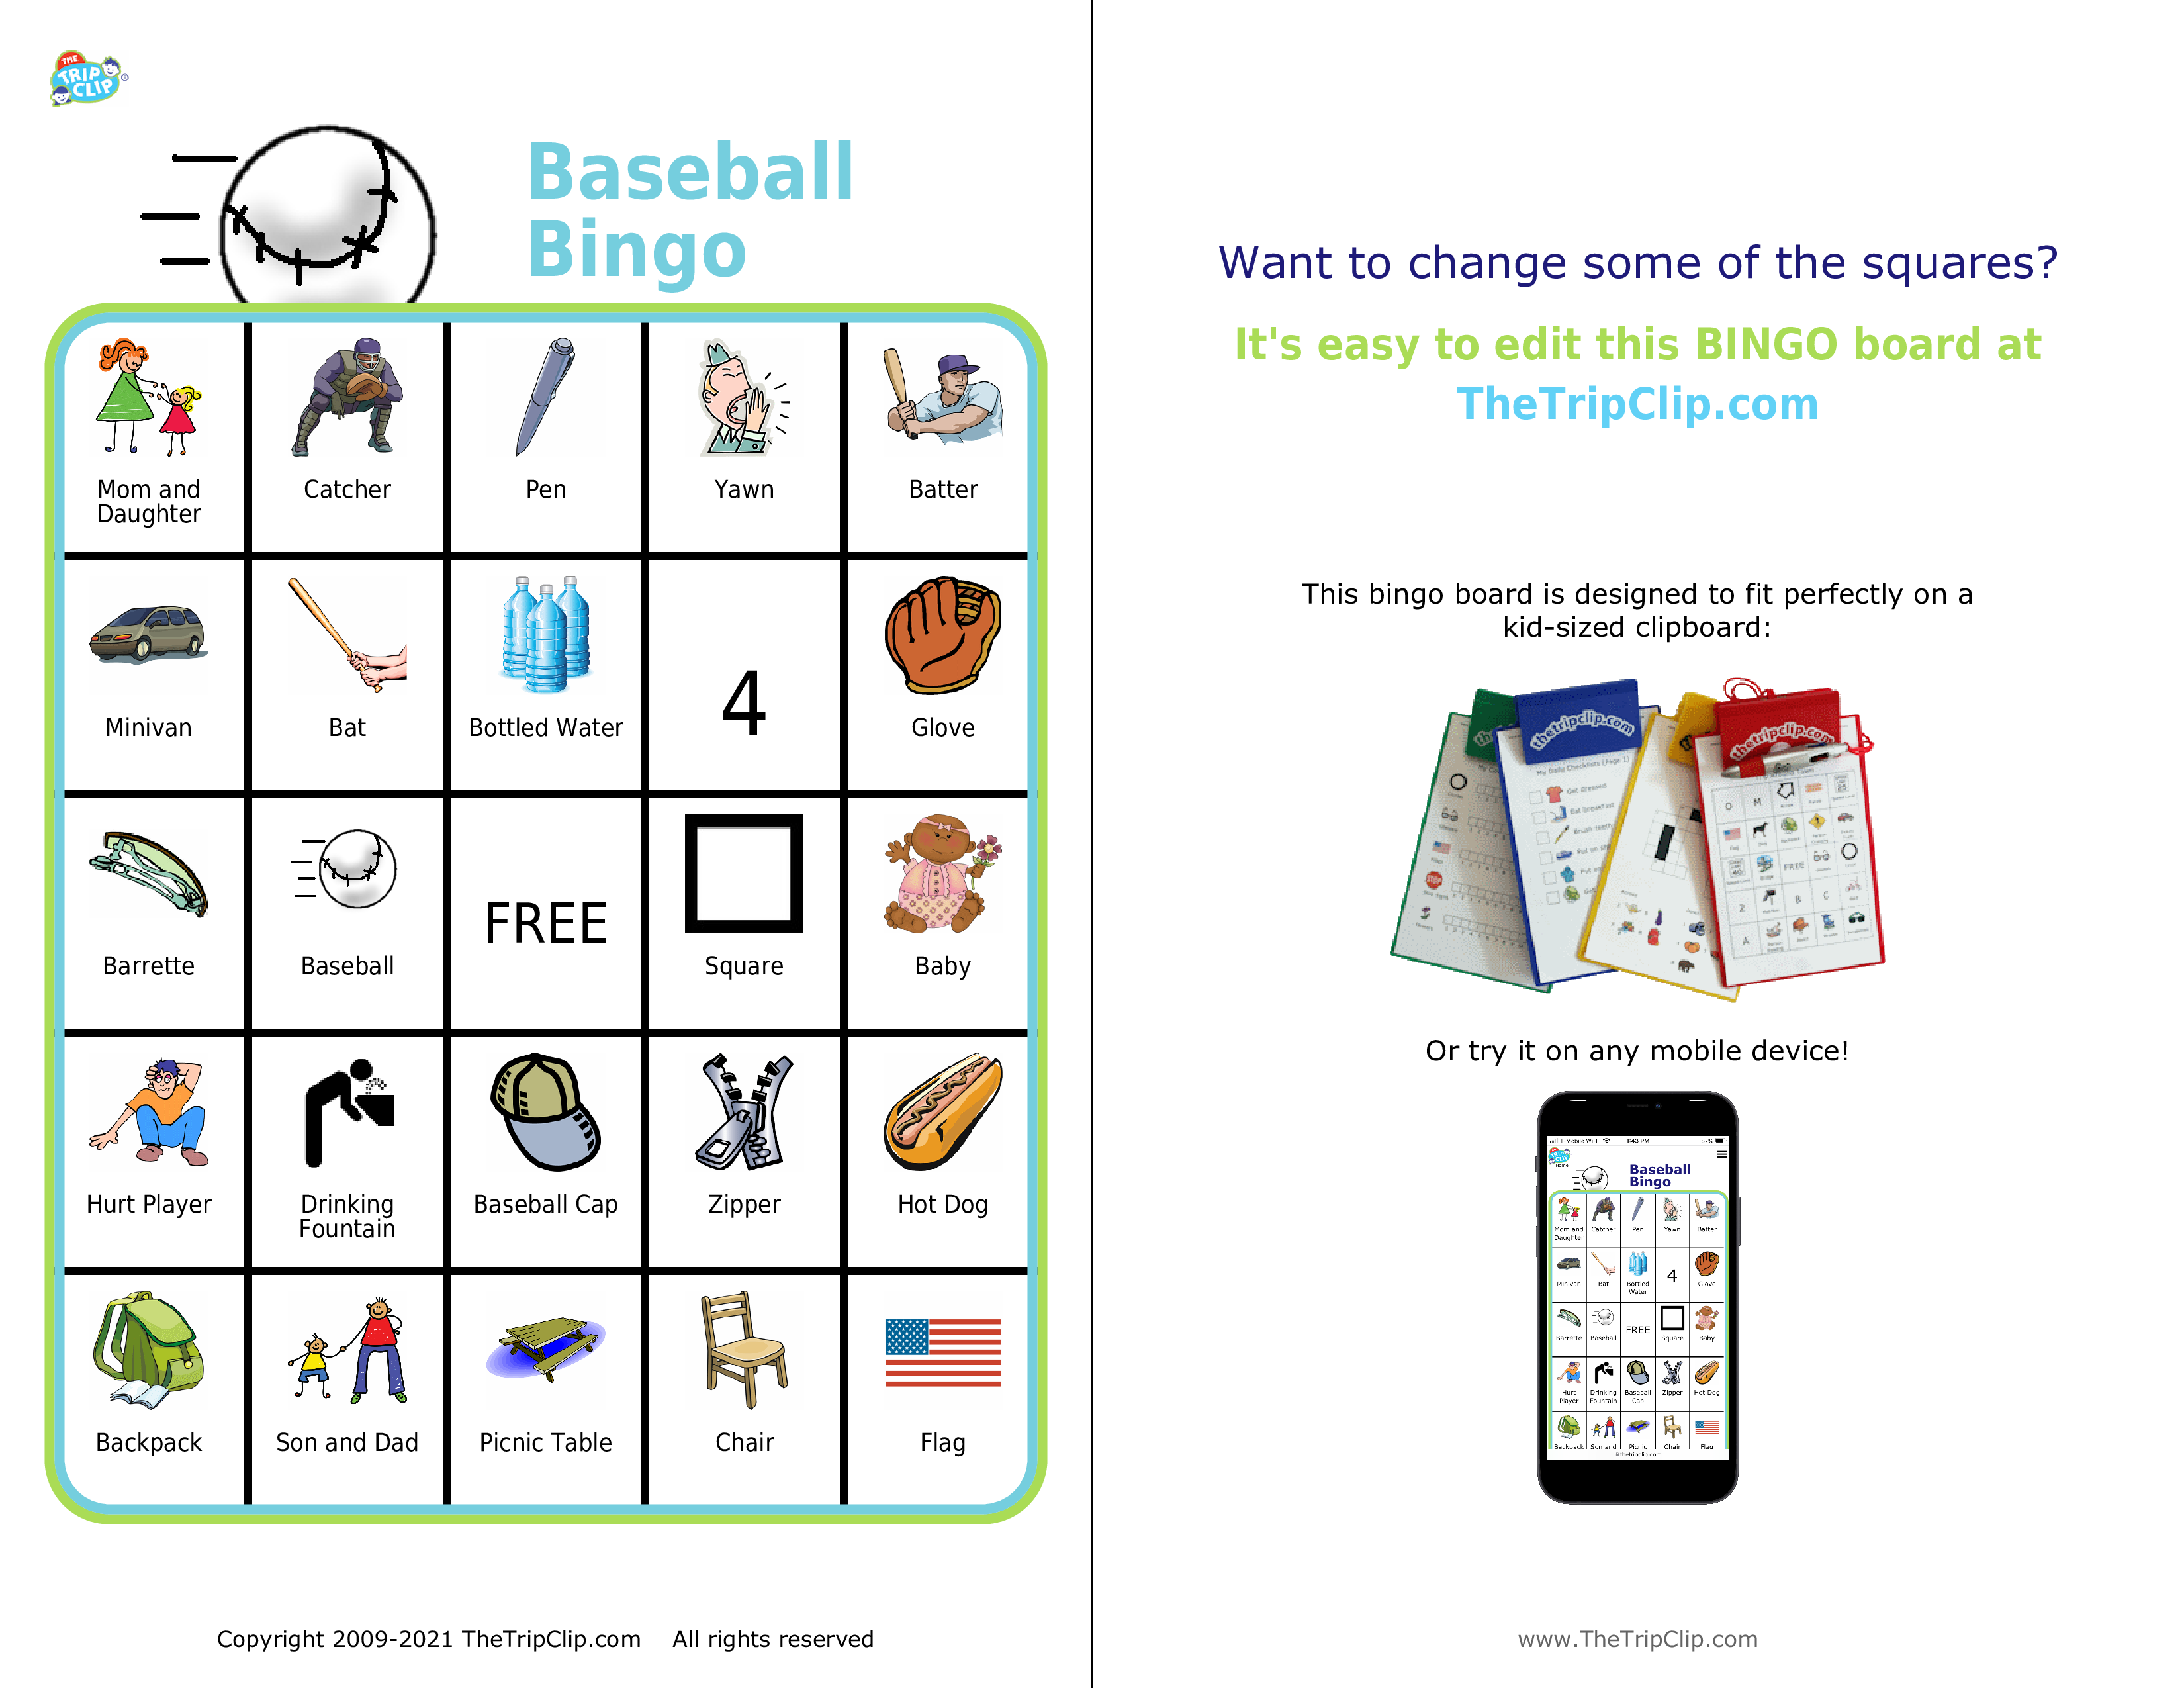 Bingo board with baseball at the top and titled Baseball Bingo